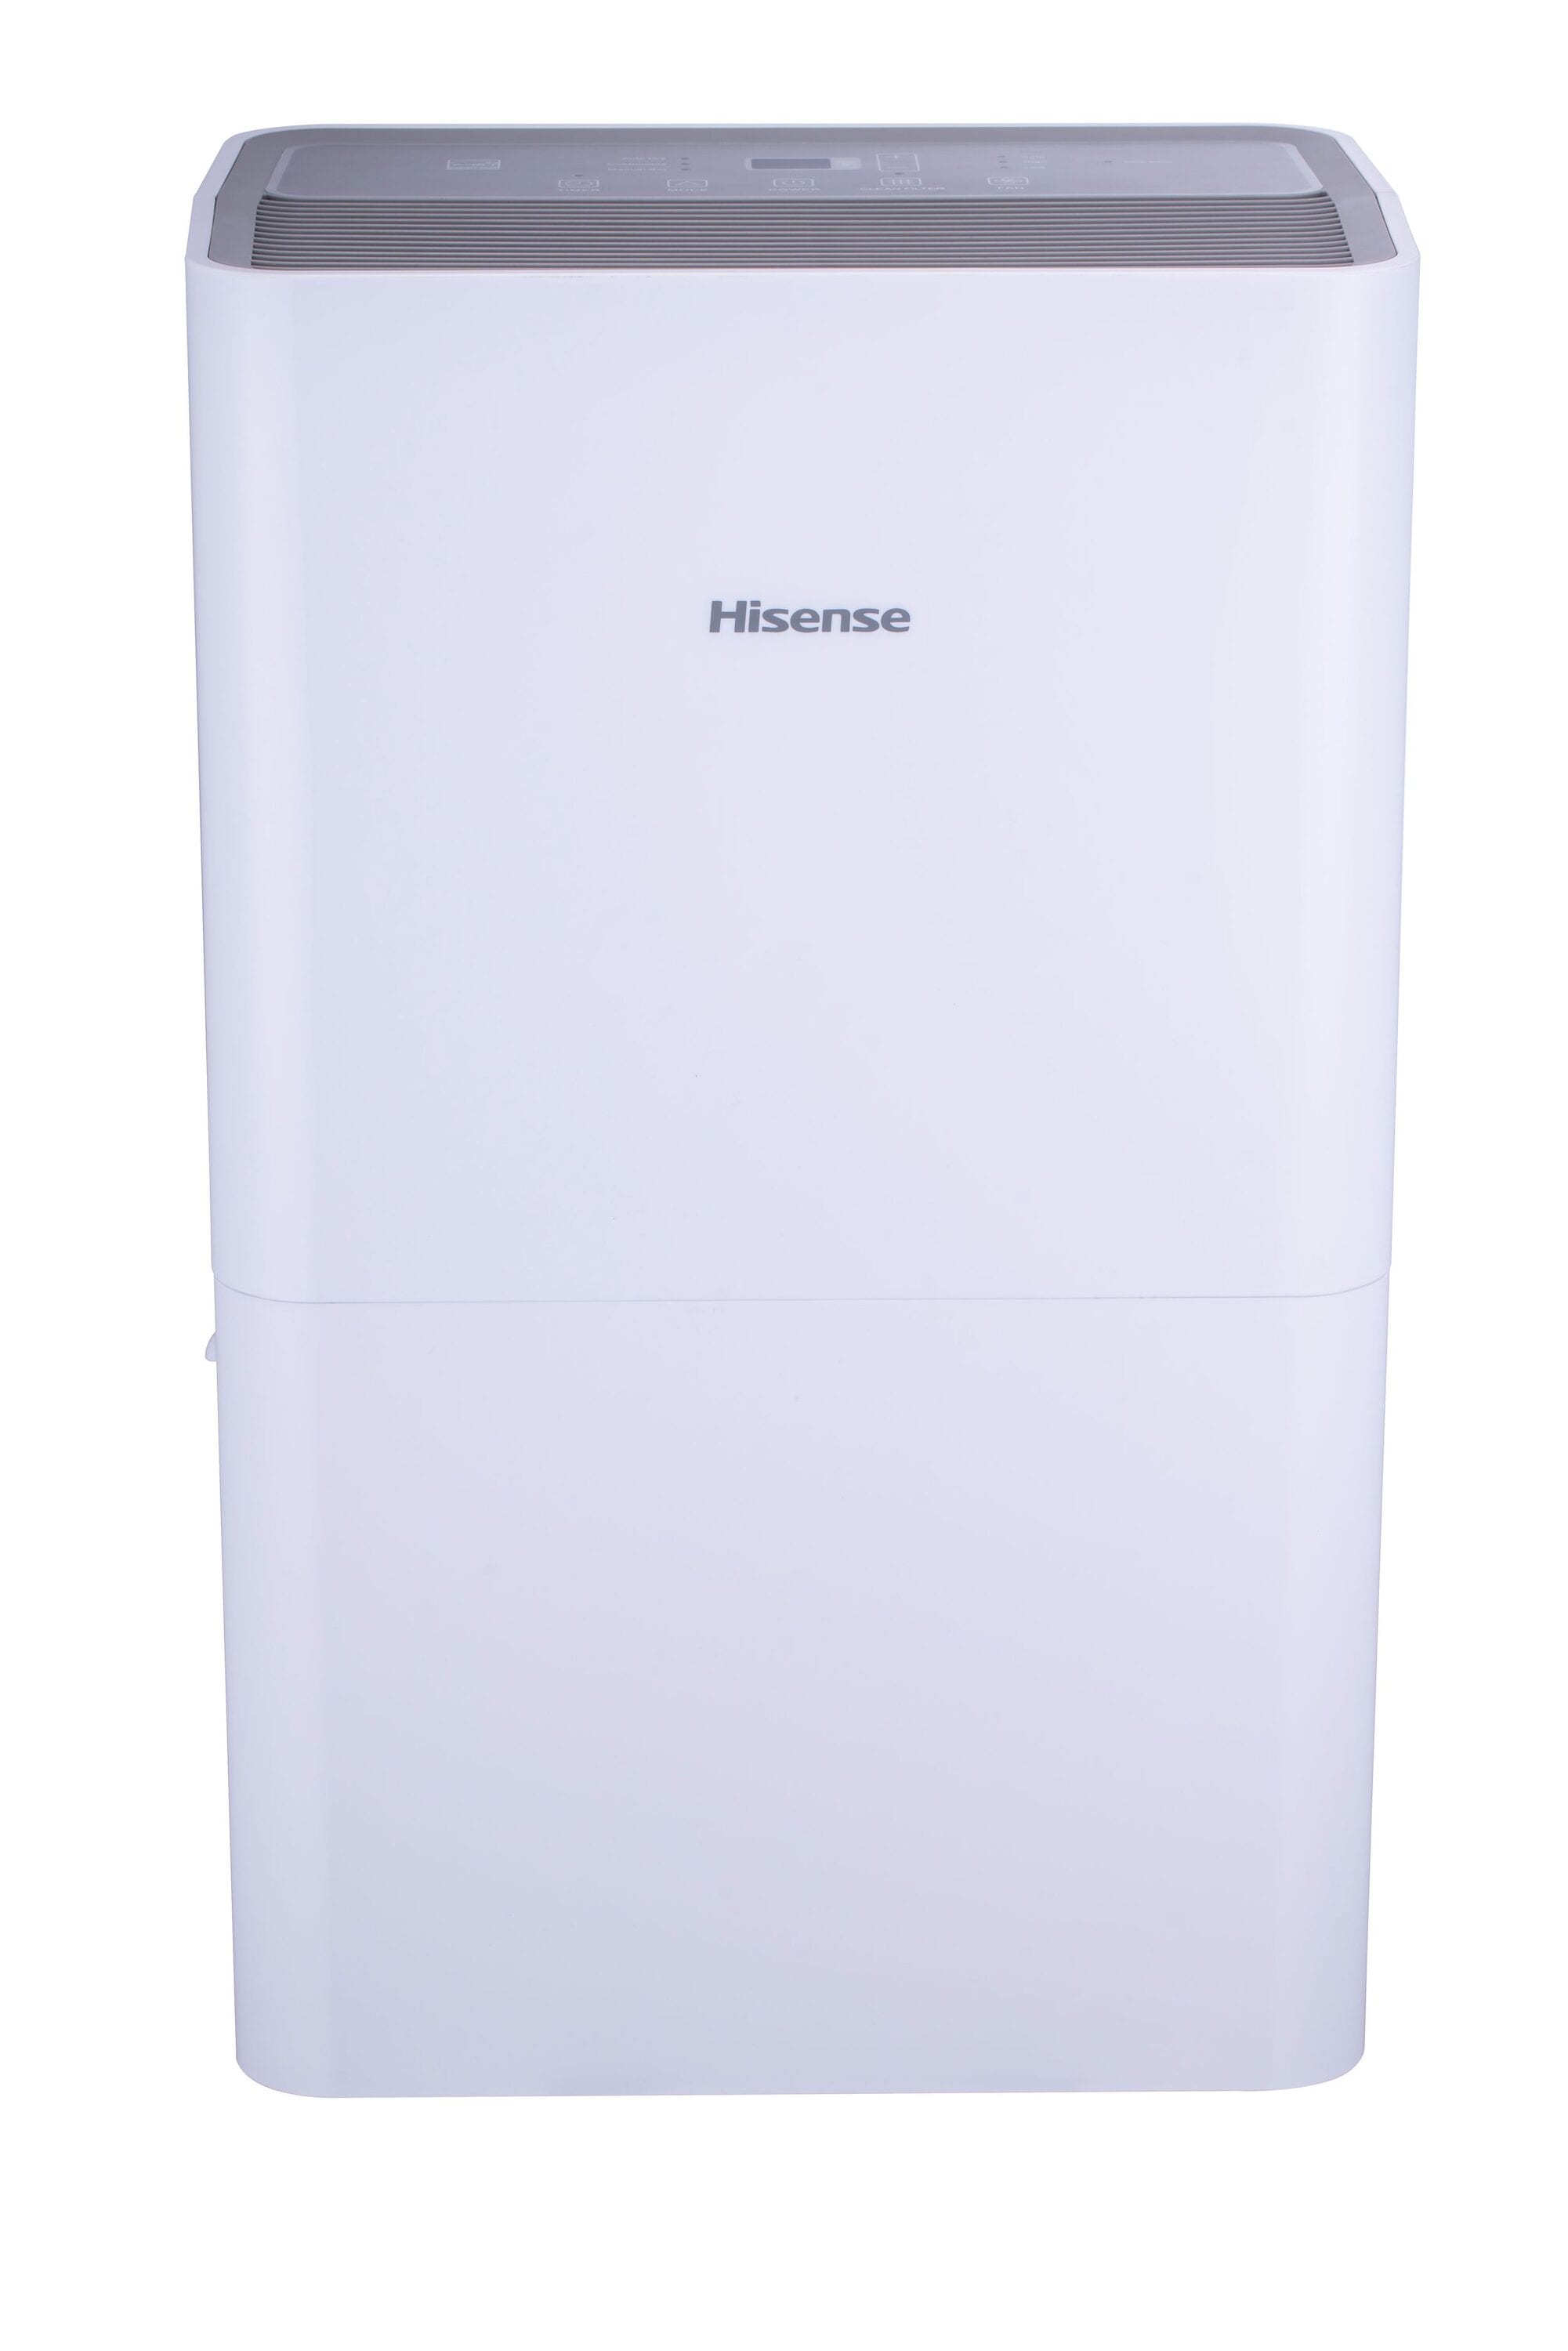 Hisense 50-Pint 2-Speed Dehumidifier ENERGY STAR (For Rooms 3001+ 